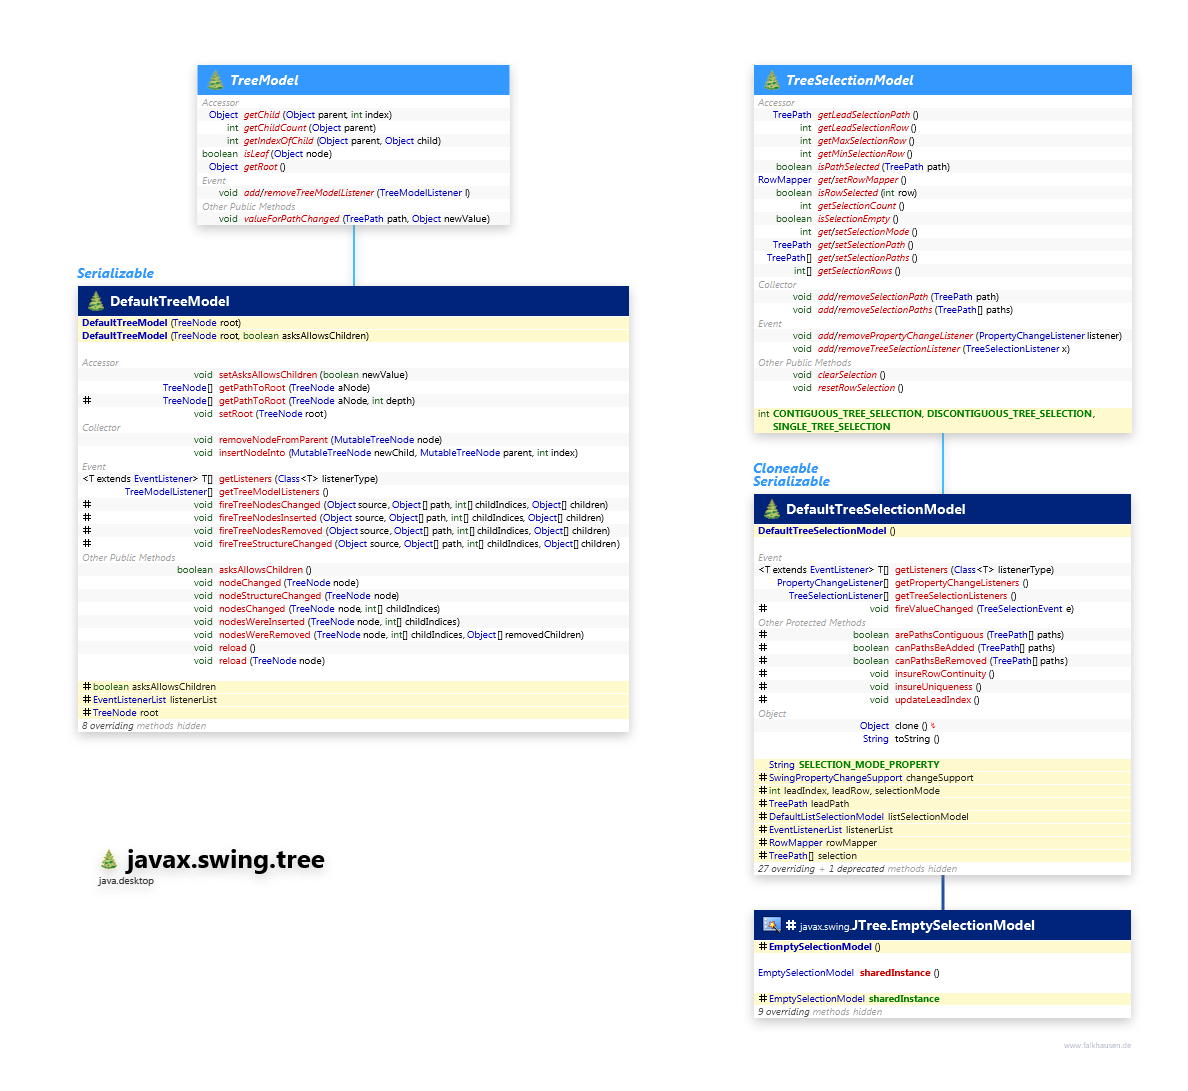 javax.swing.tree TreeModel class diagram and api documentation for Java 10